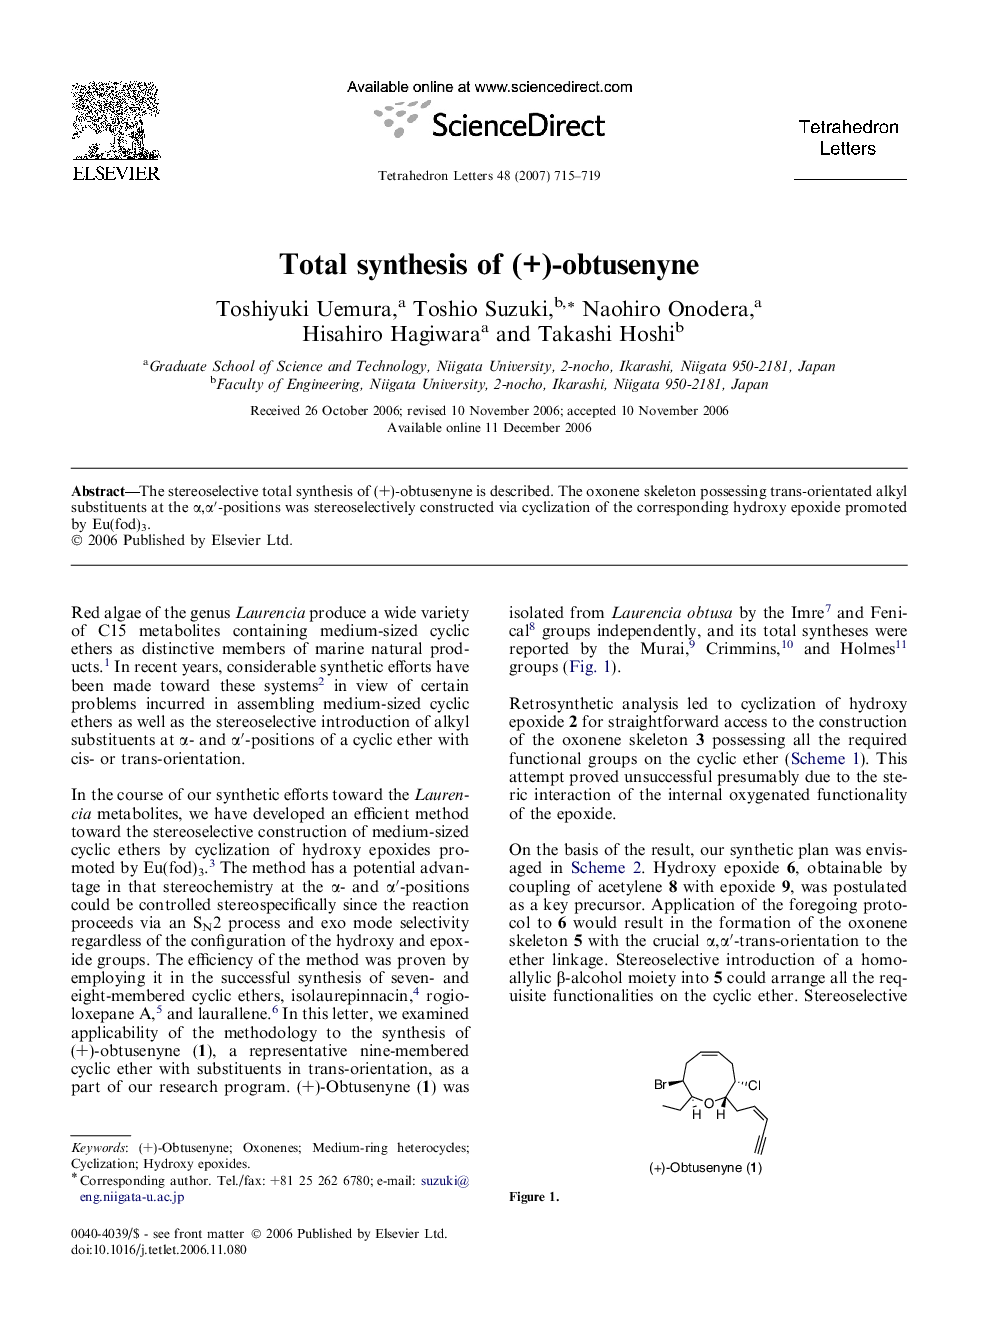 Total synthesis of (+)-obtusenyne